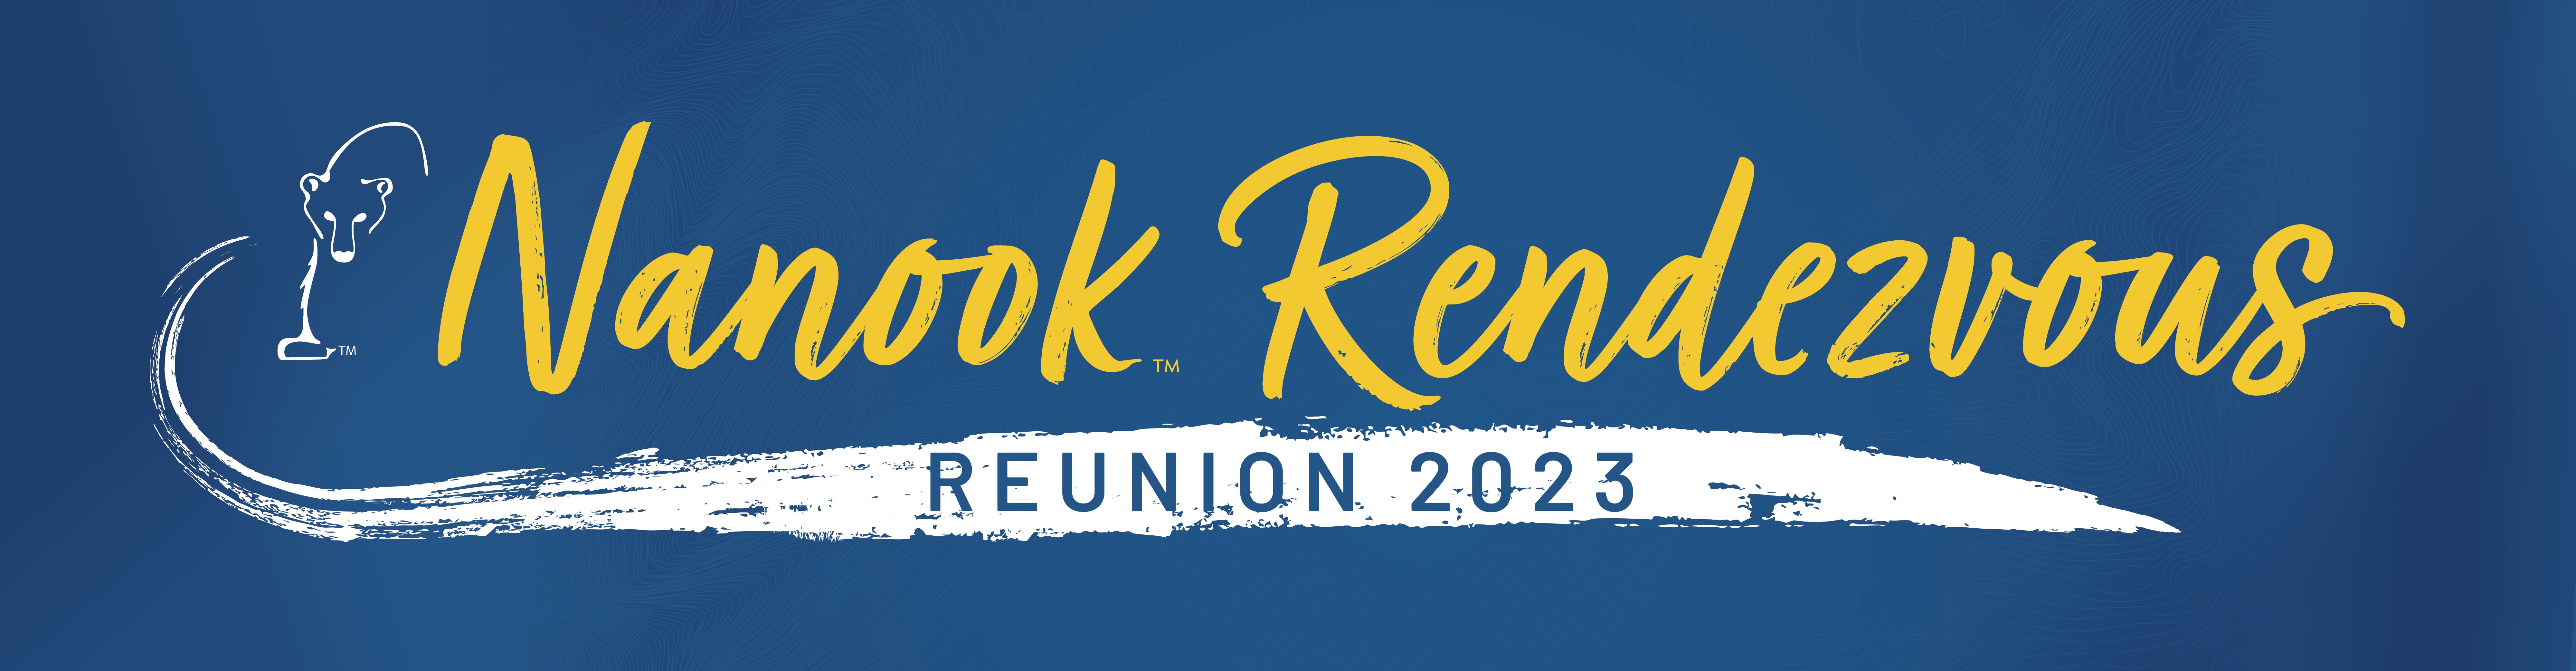 2023 Nanook Rendezvous logo